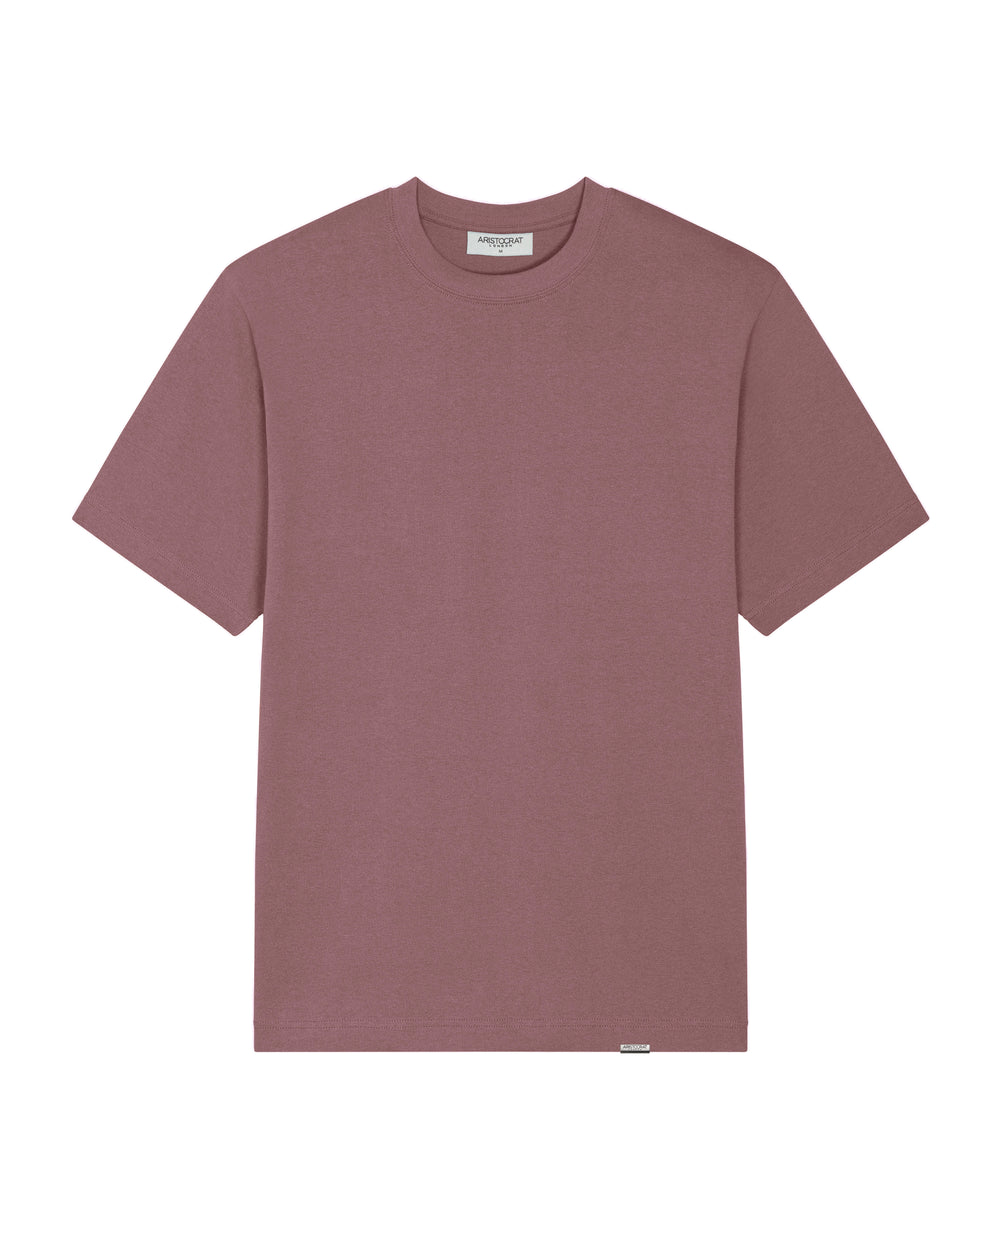 Essential T-Shirt - Mocha Brown